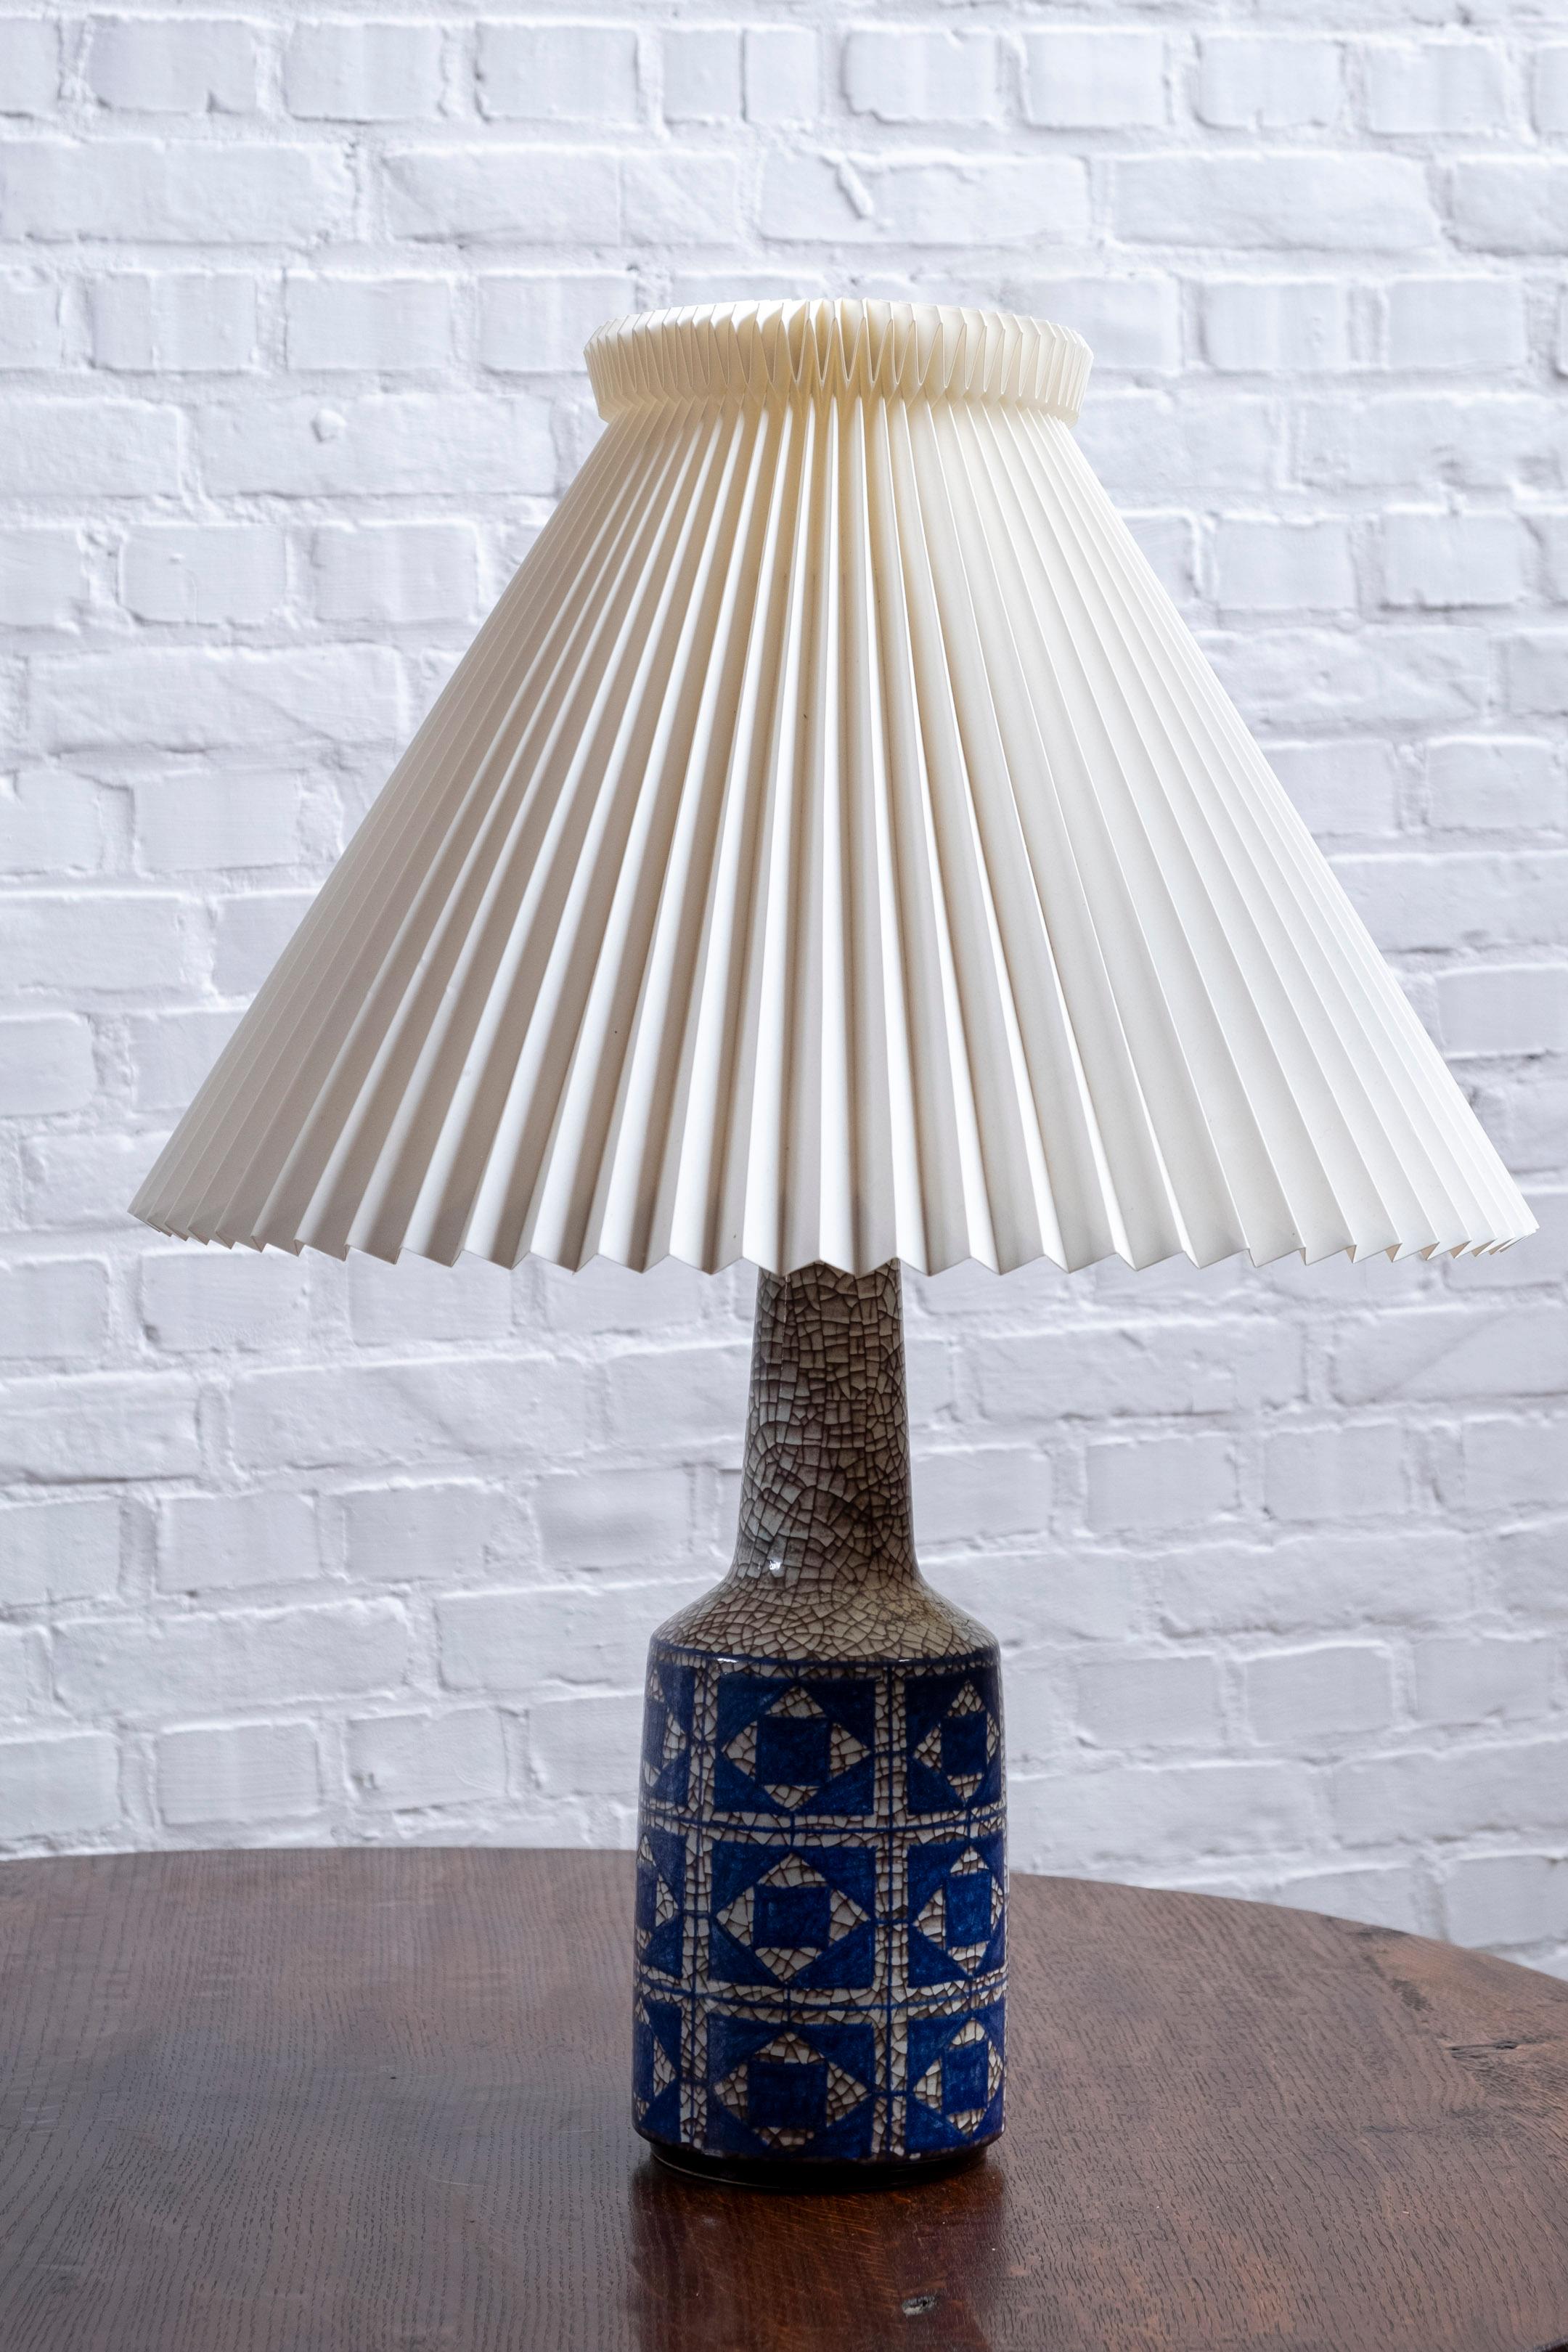 Scandinavian Modern Ceramic Table Lamp by Michael Andersen & Sons and Marianne Starck, 1950s Denmark For Sale